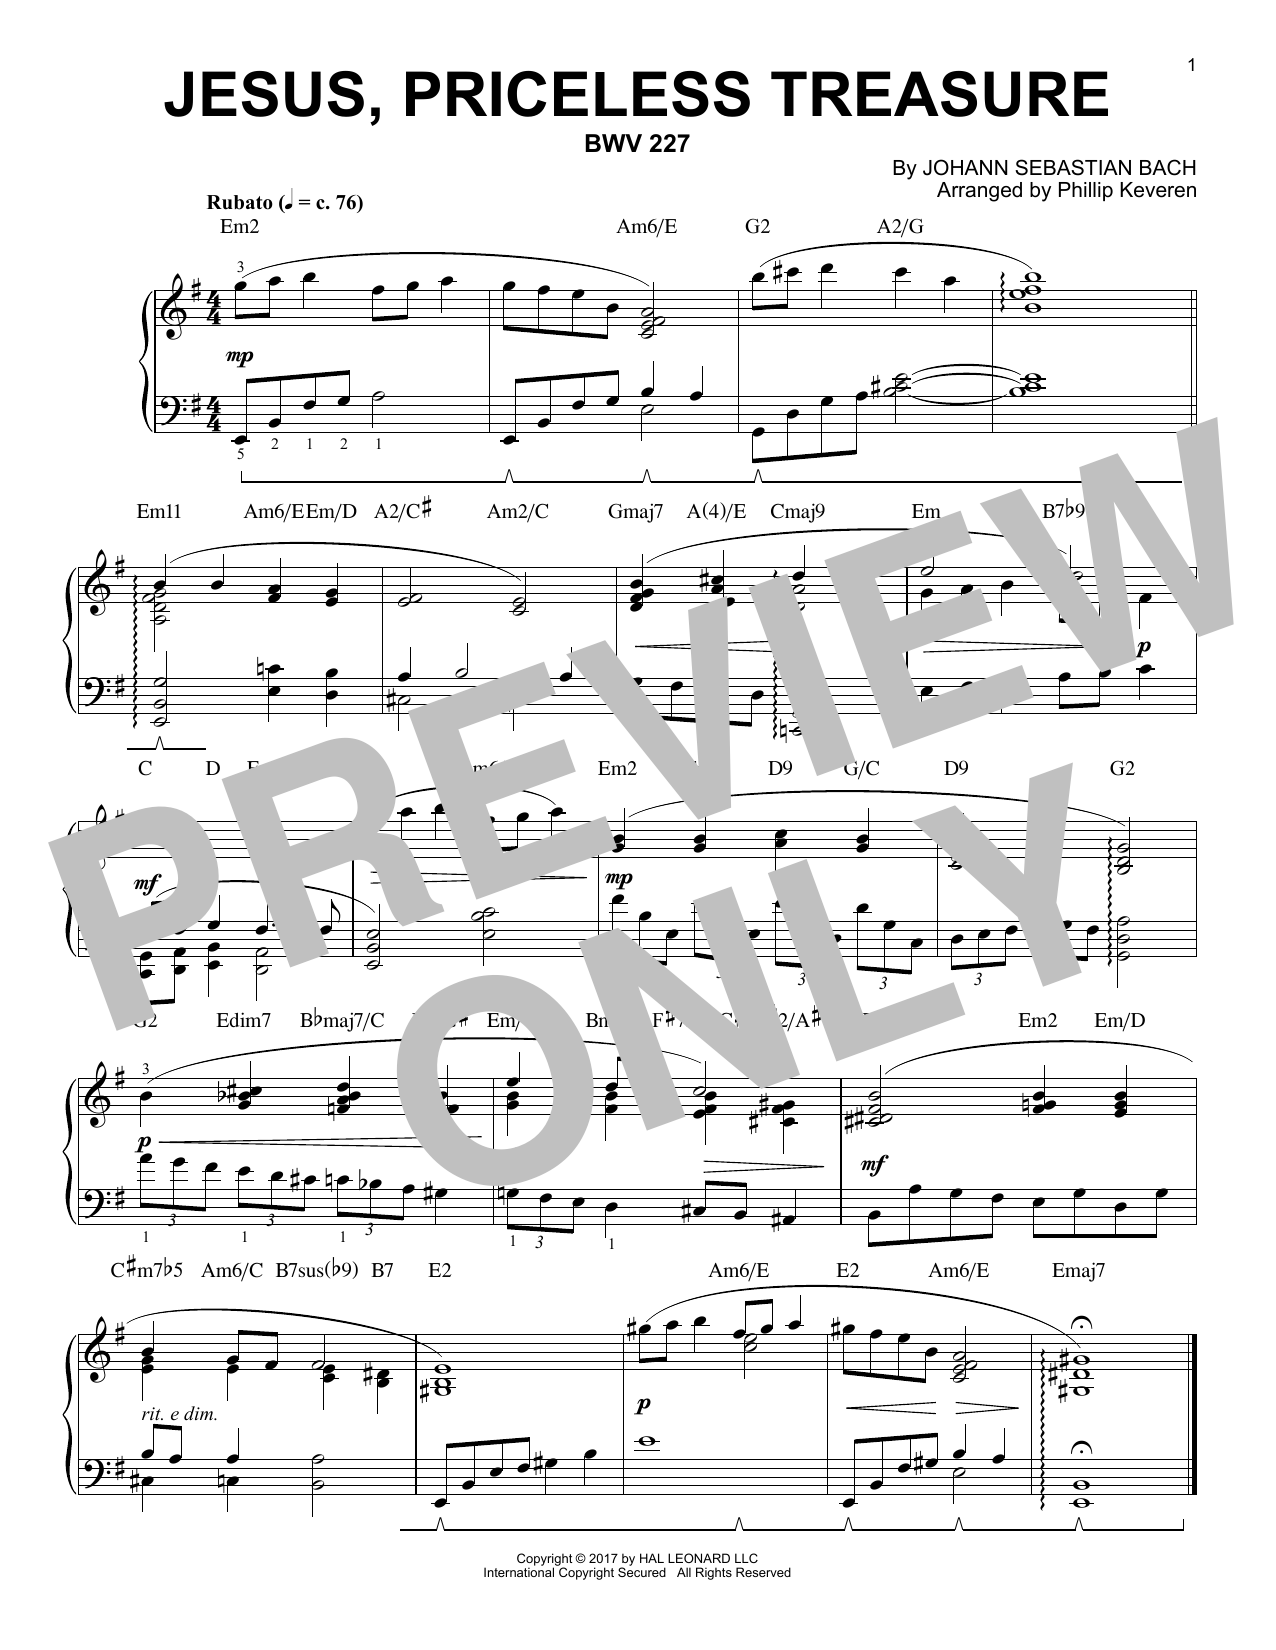 Johann Sebastian Bach Jesus, Priceless Treasure, BWV 227 [Jazz version] (arr. Phillip Keveren) Sheet Music Notes & Chords for Piano - Download or Print PDF